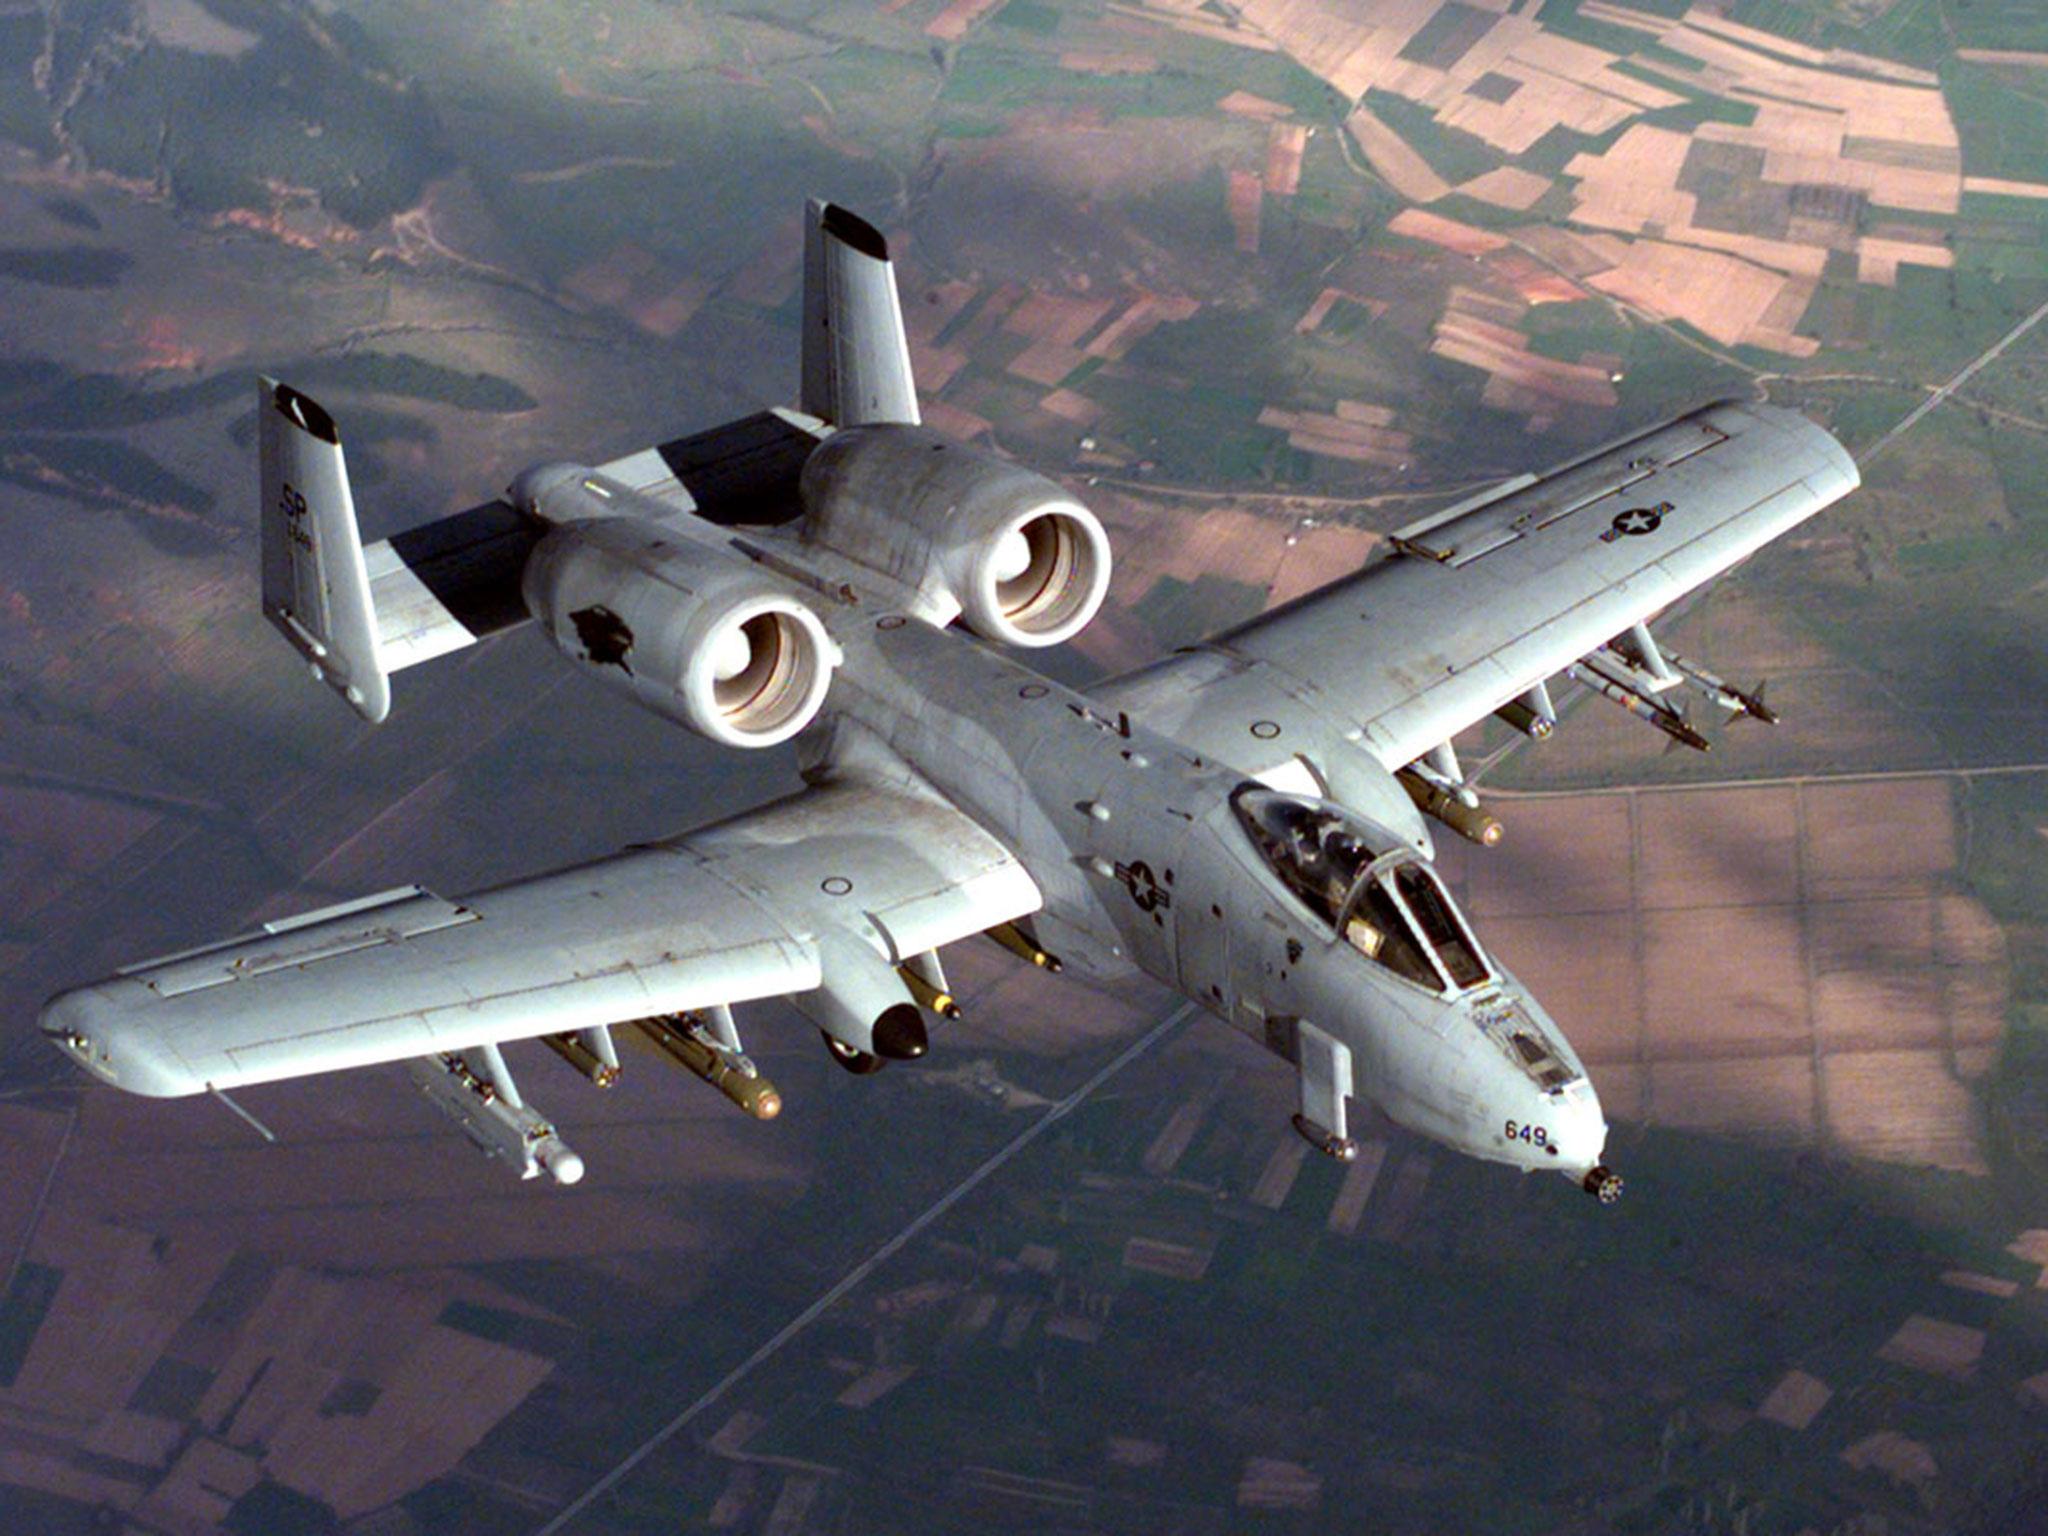 Isis' Amaq agency claimed the group shot down the A-10 Thunderbolt "Warthog" warplane near Markadah, Hasakah, Syria